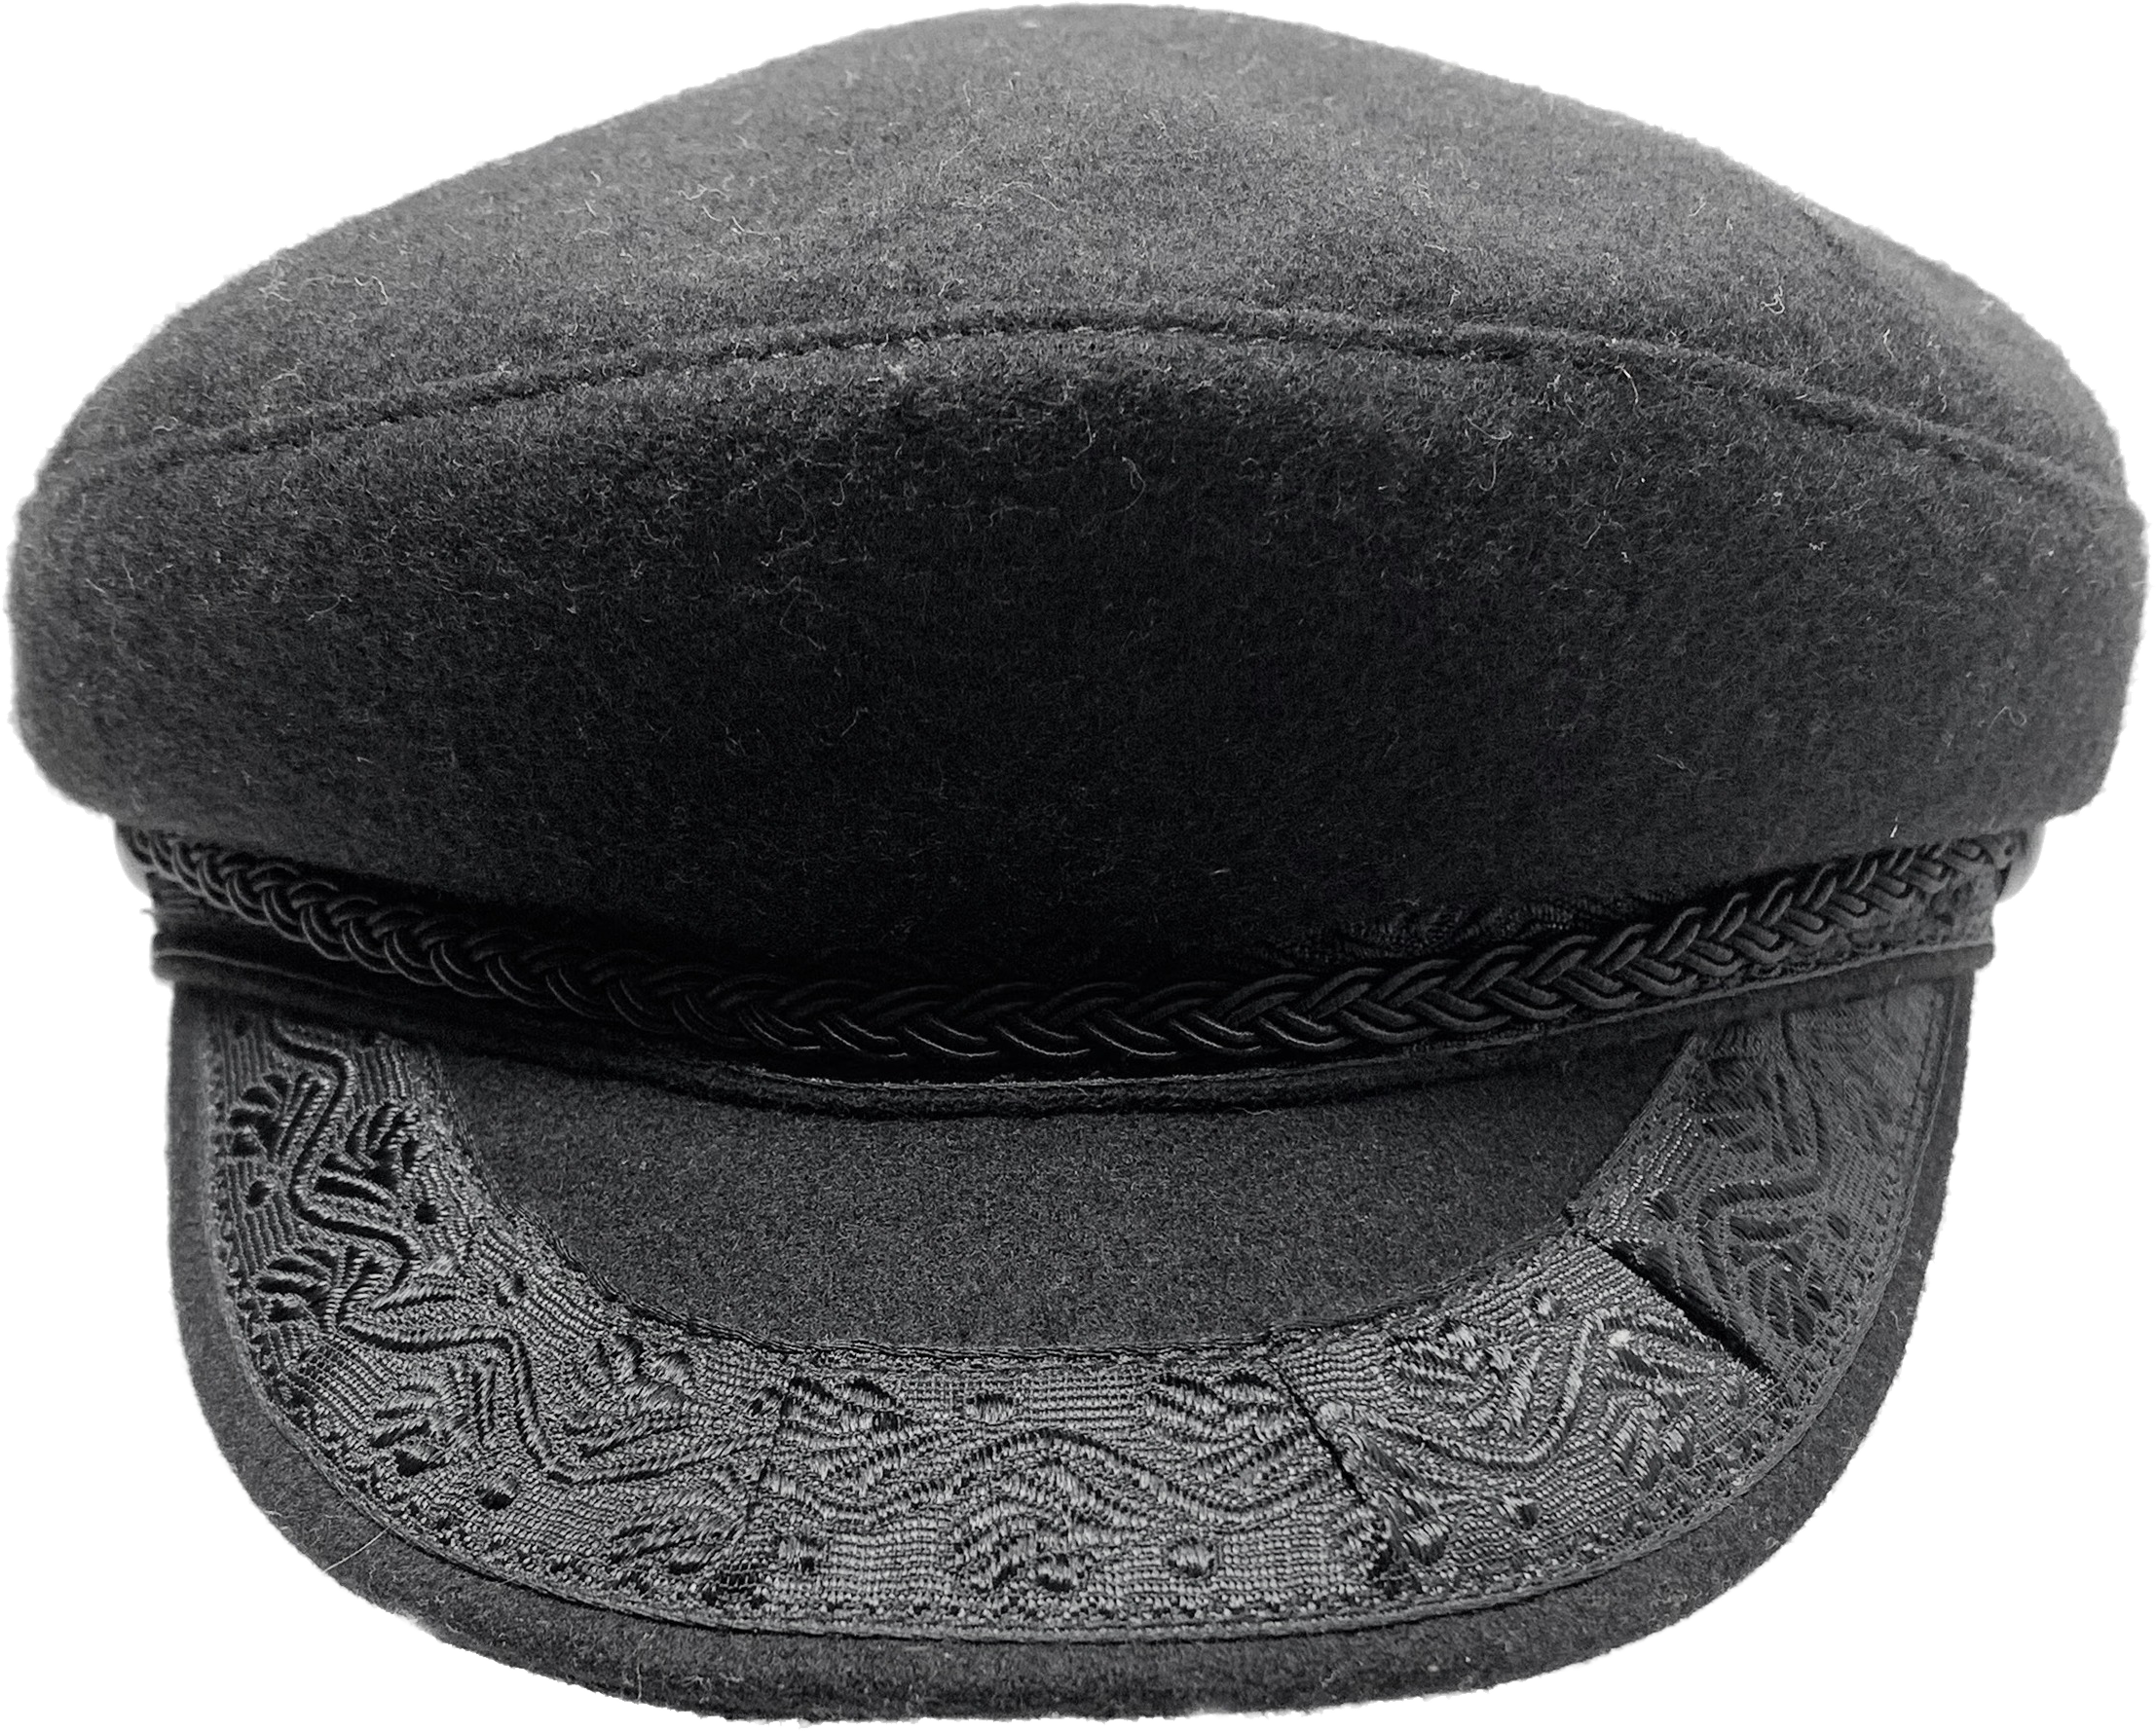 Vintage 80's/90's Ornate Black Wool Felt Mariner's Hat by New York Hat Co